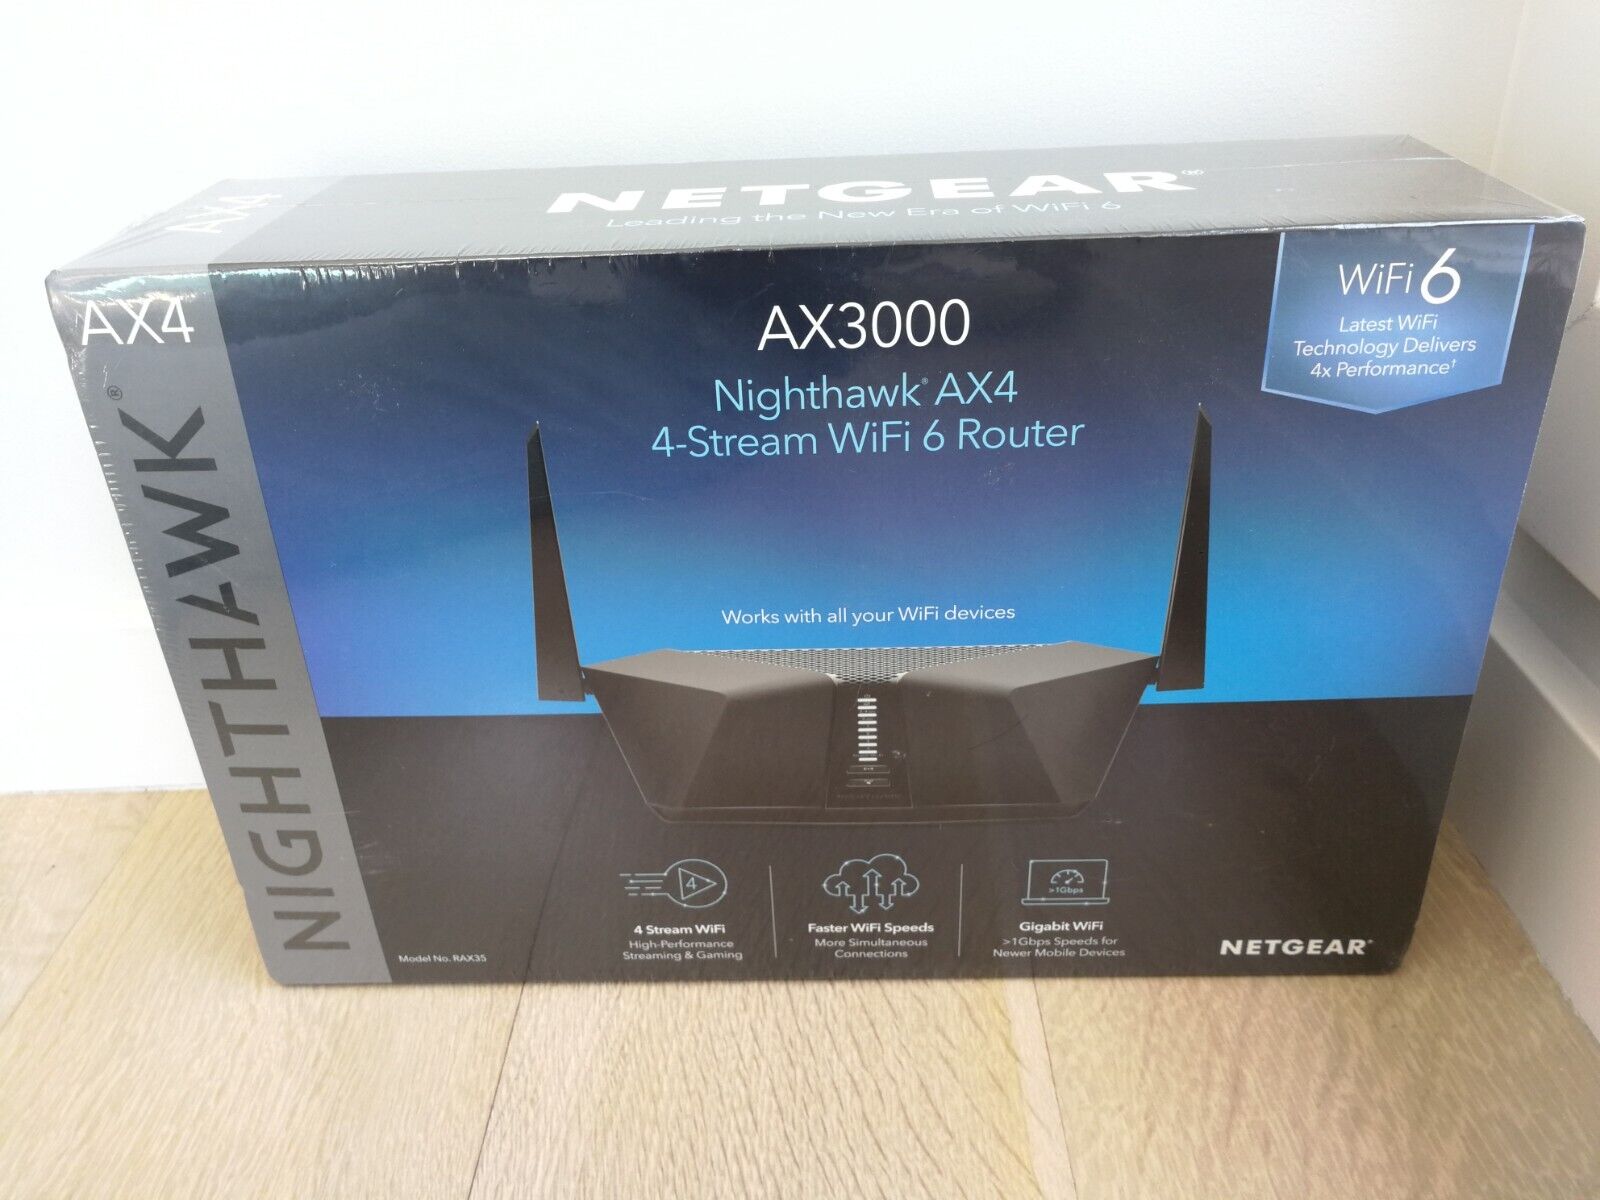 New Netgear AX3000 Nighthawk AX4 4-Stream WiFi 6 Gigabit Router RAX35-100NAS